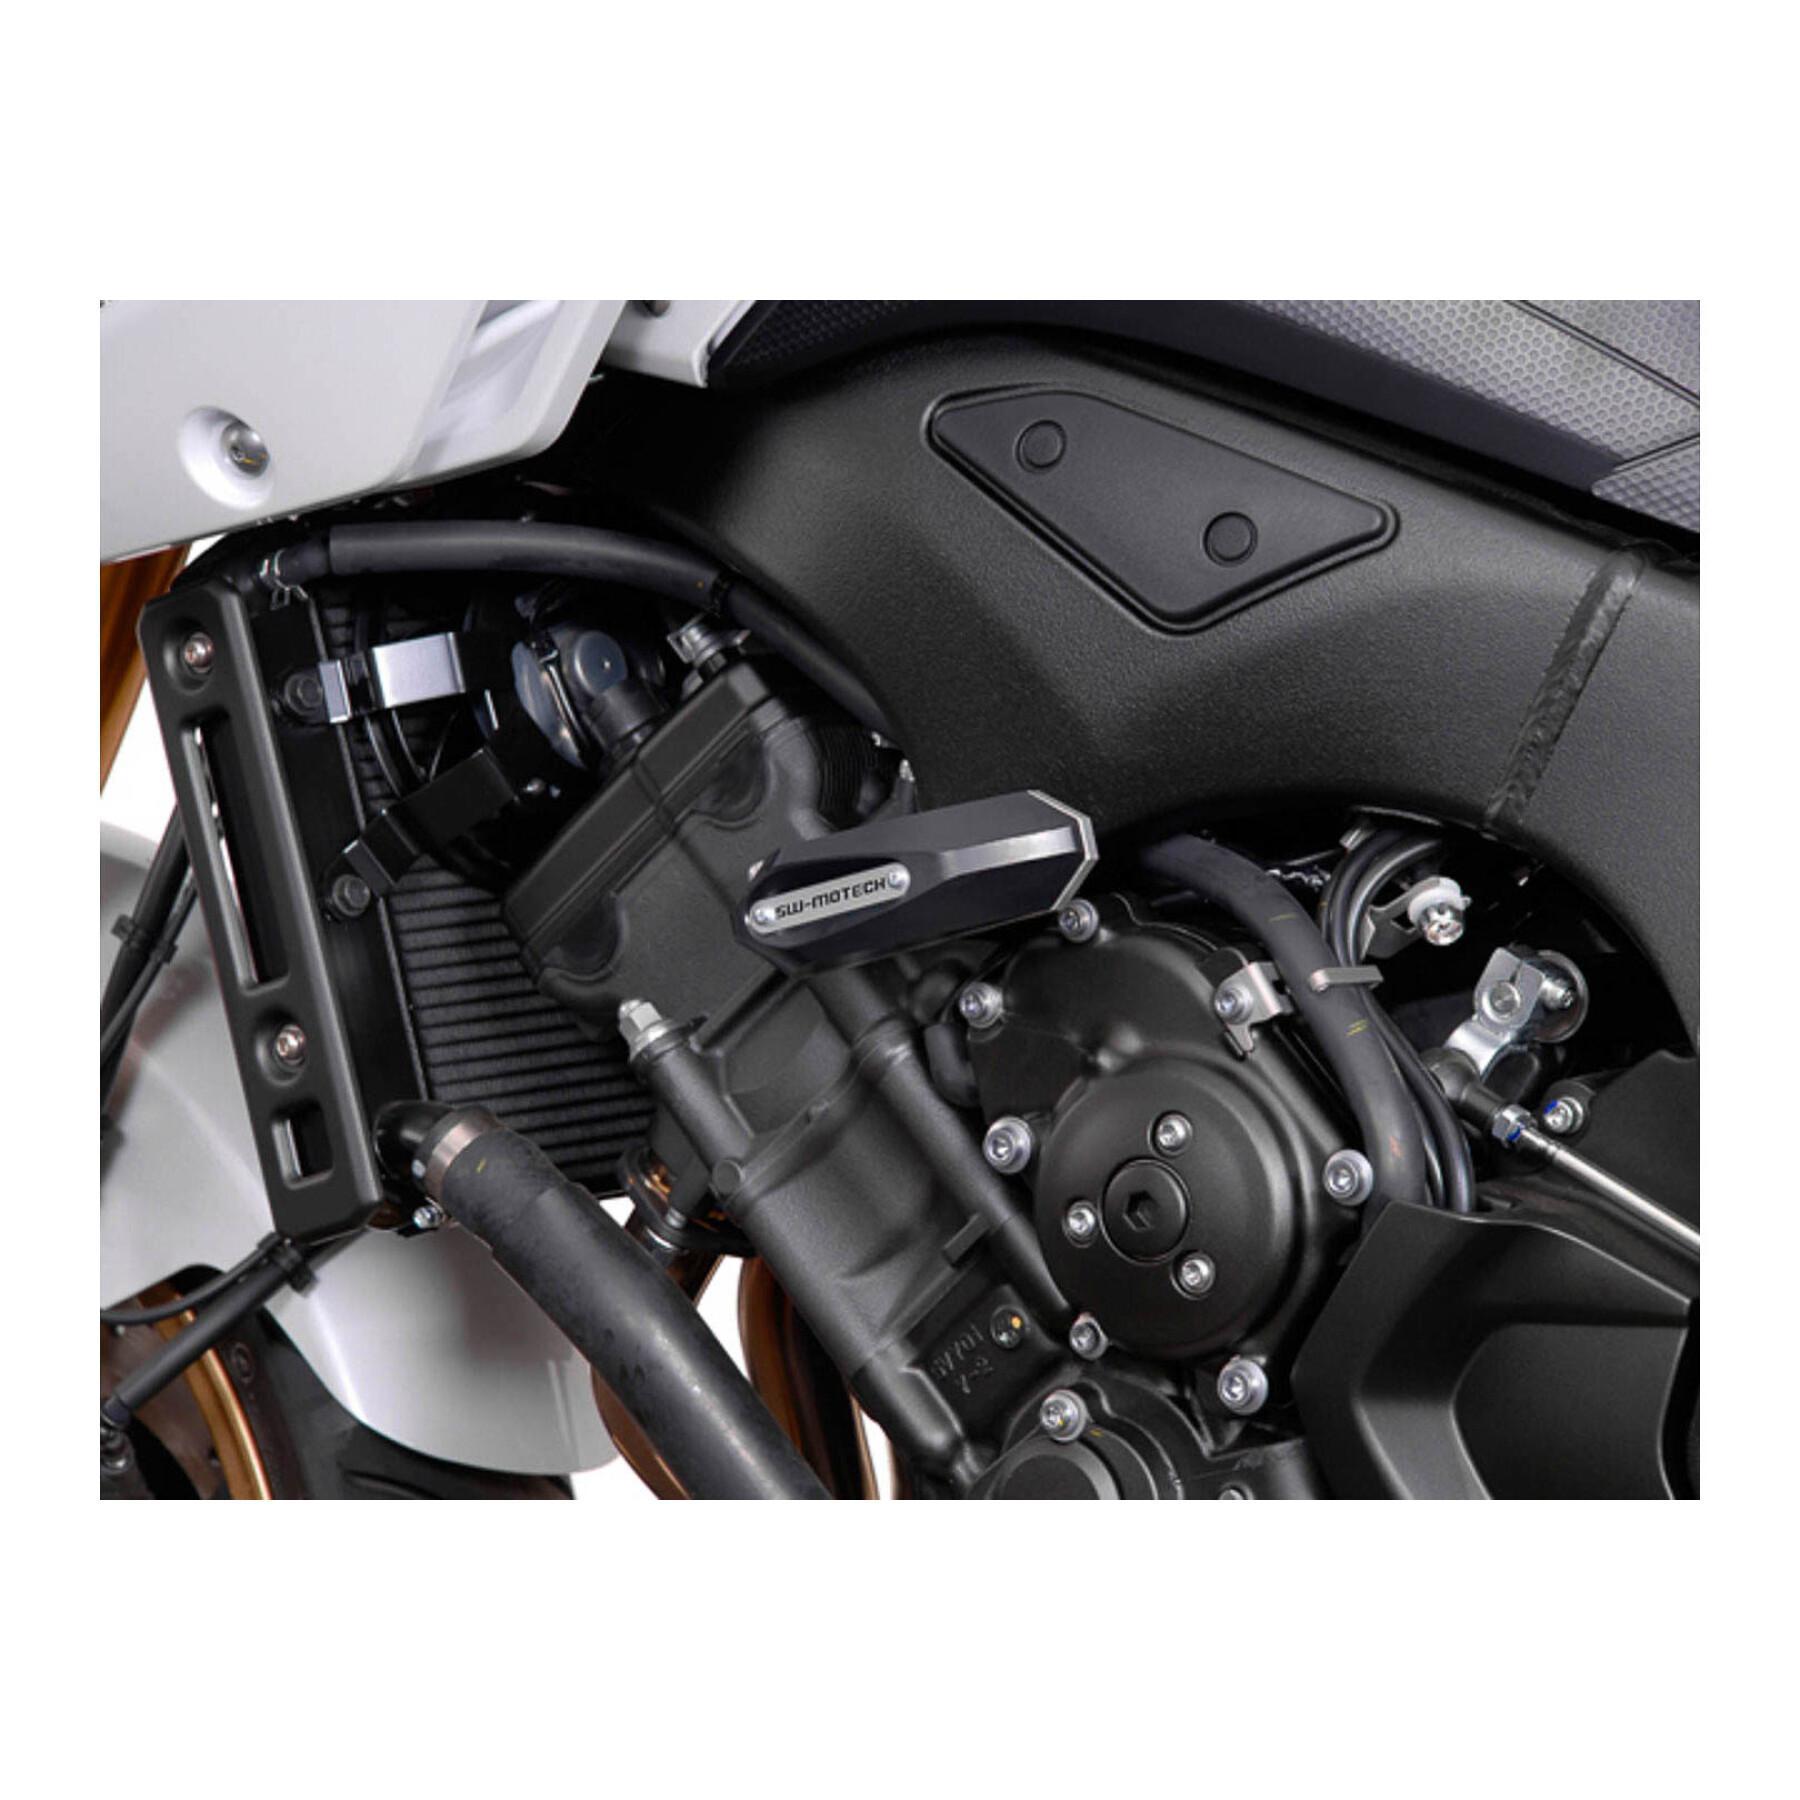 Almohadillas para el cuadro de la moto Sw-Motech Yamaha Fz8/Fz8 Fazer (10-)